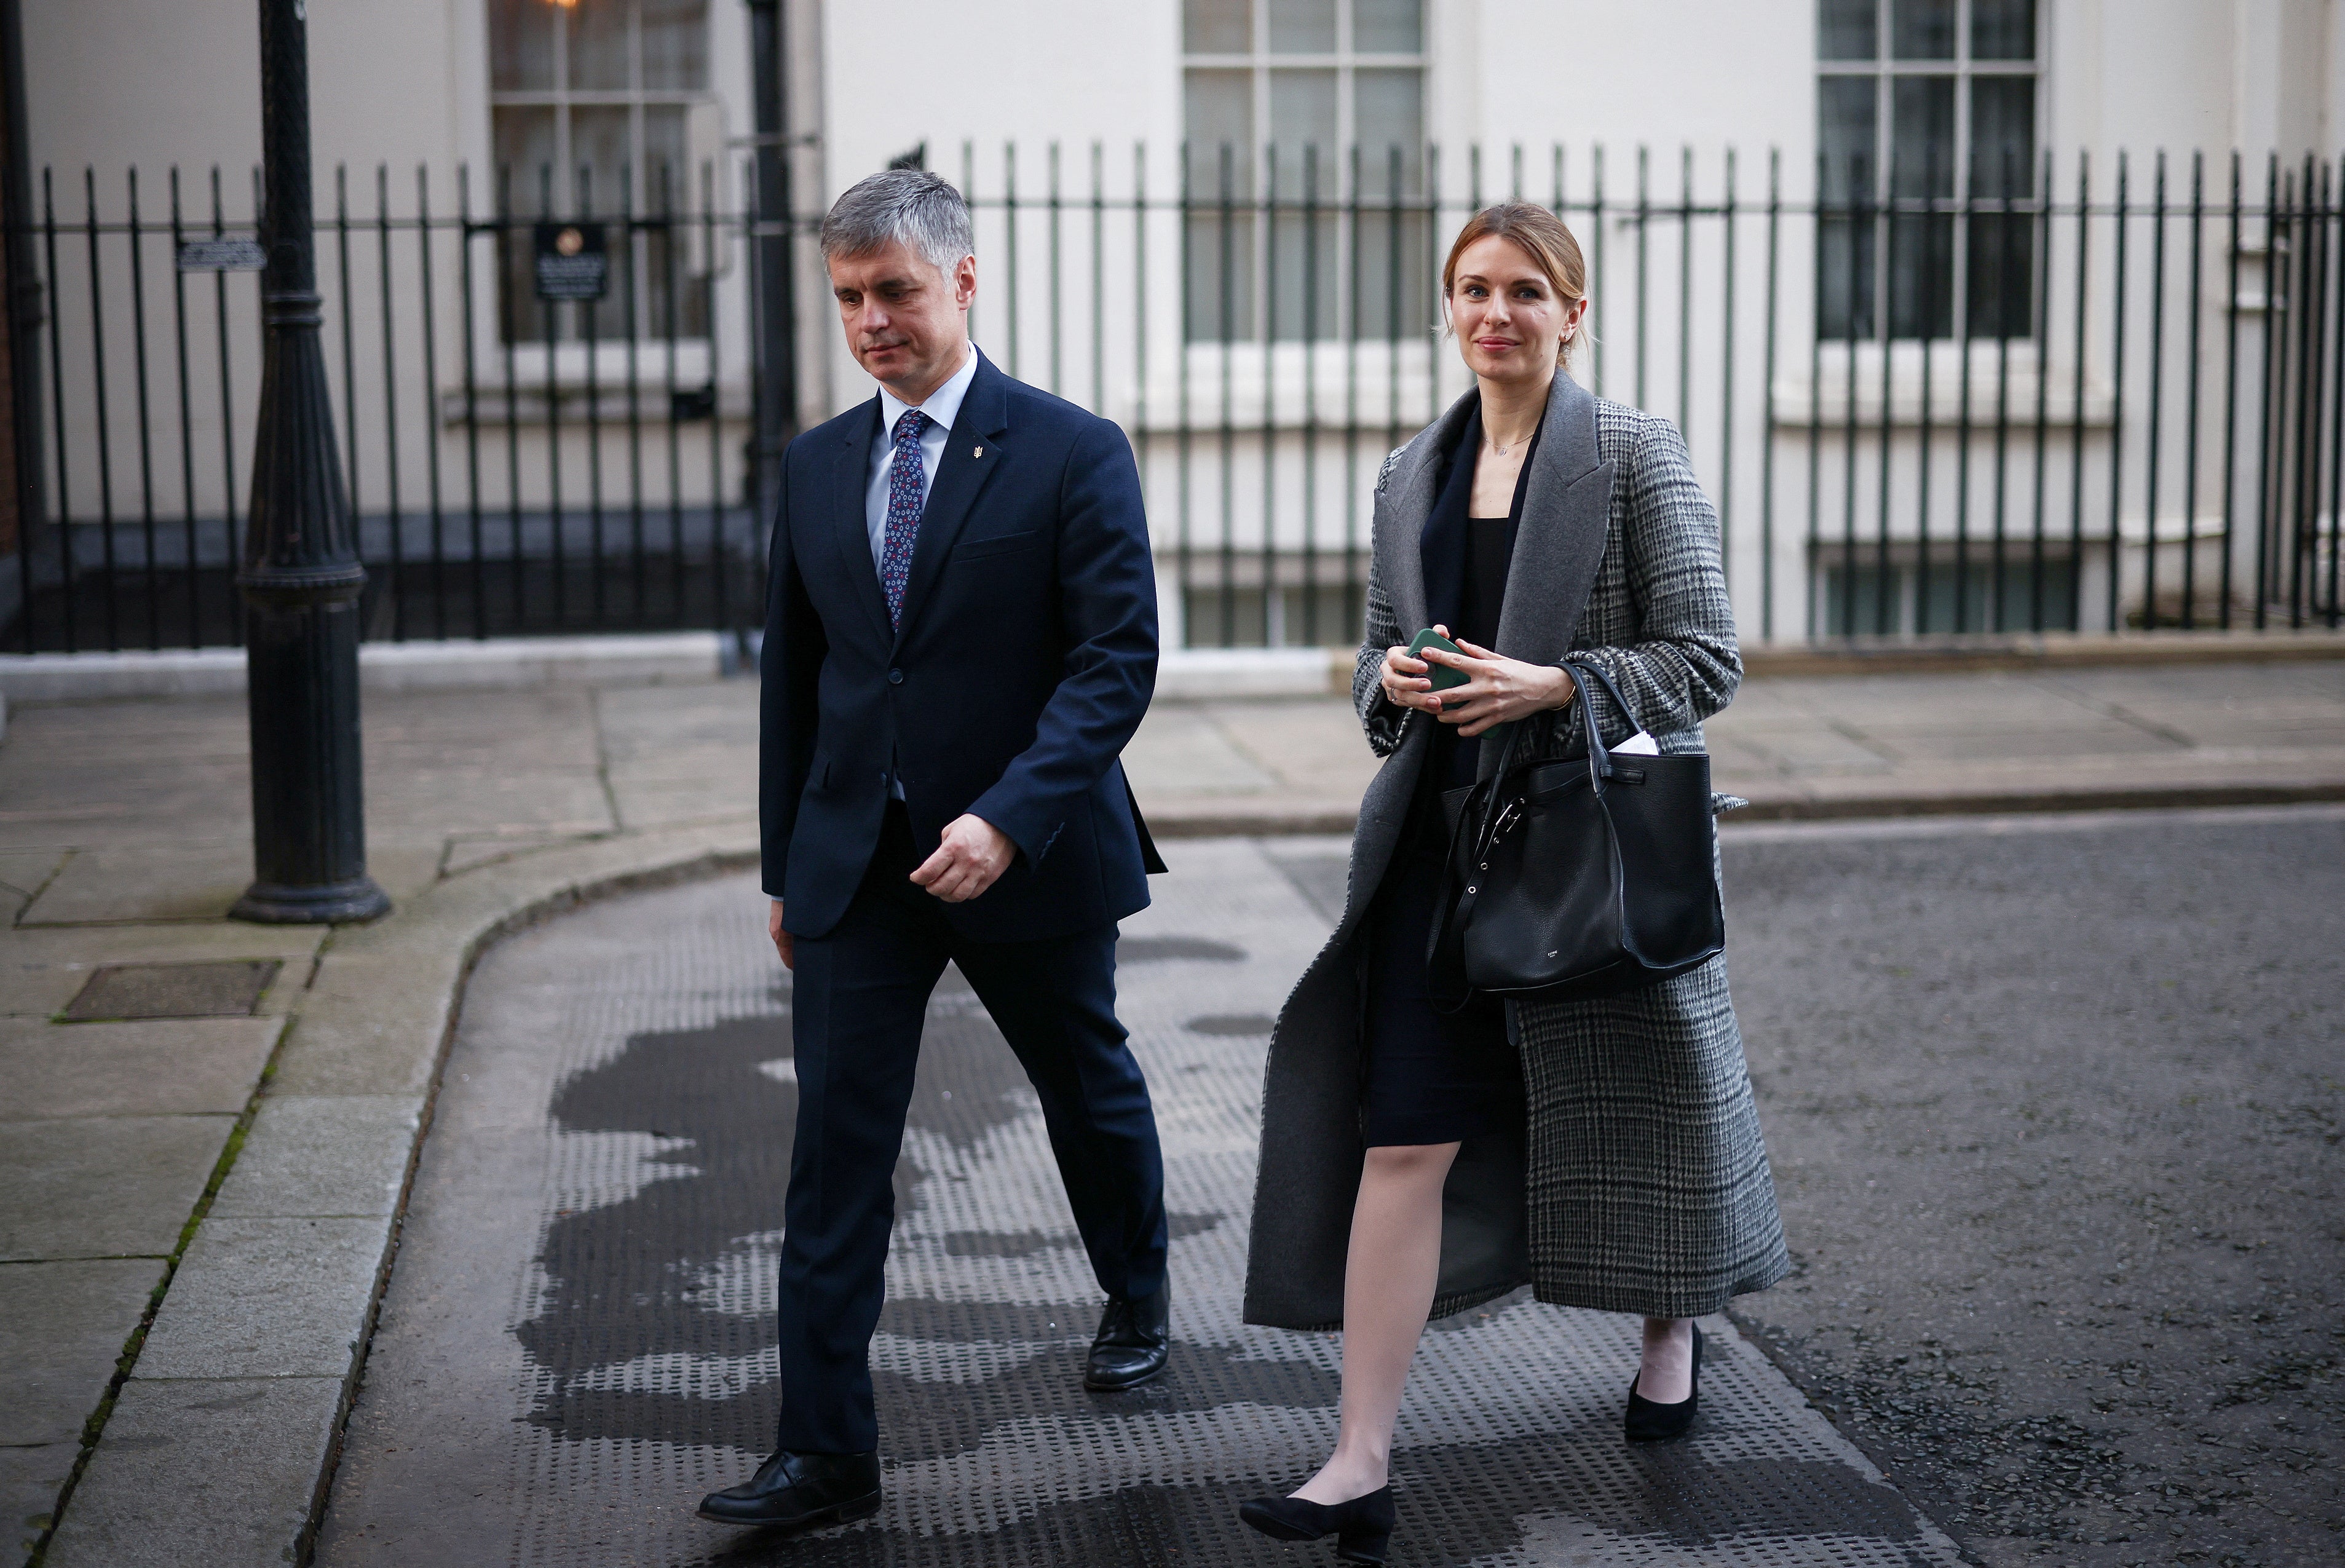 Ukraine’s Ambassador to the United Kingdom Vadym Prystaiko and Ukrainian Member of Parliament Lesia Vasylenko leave Number 10 Downing Street